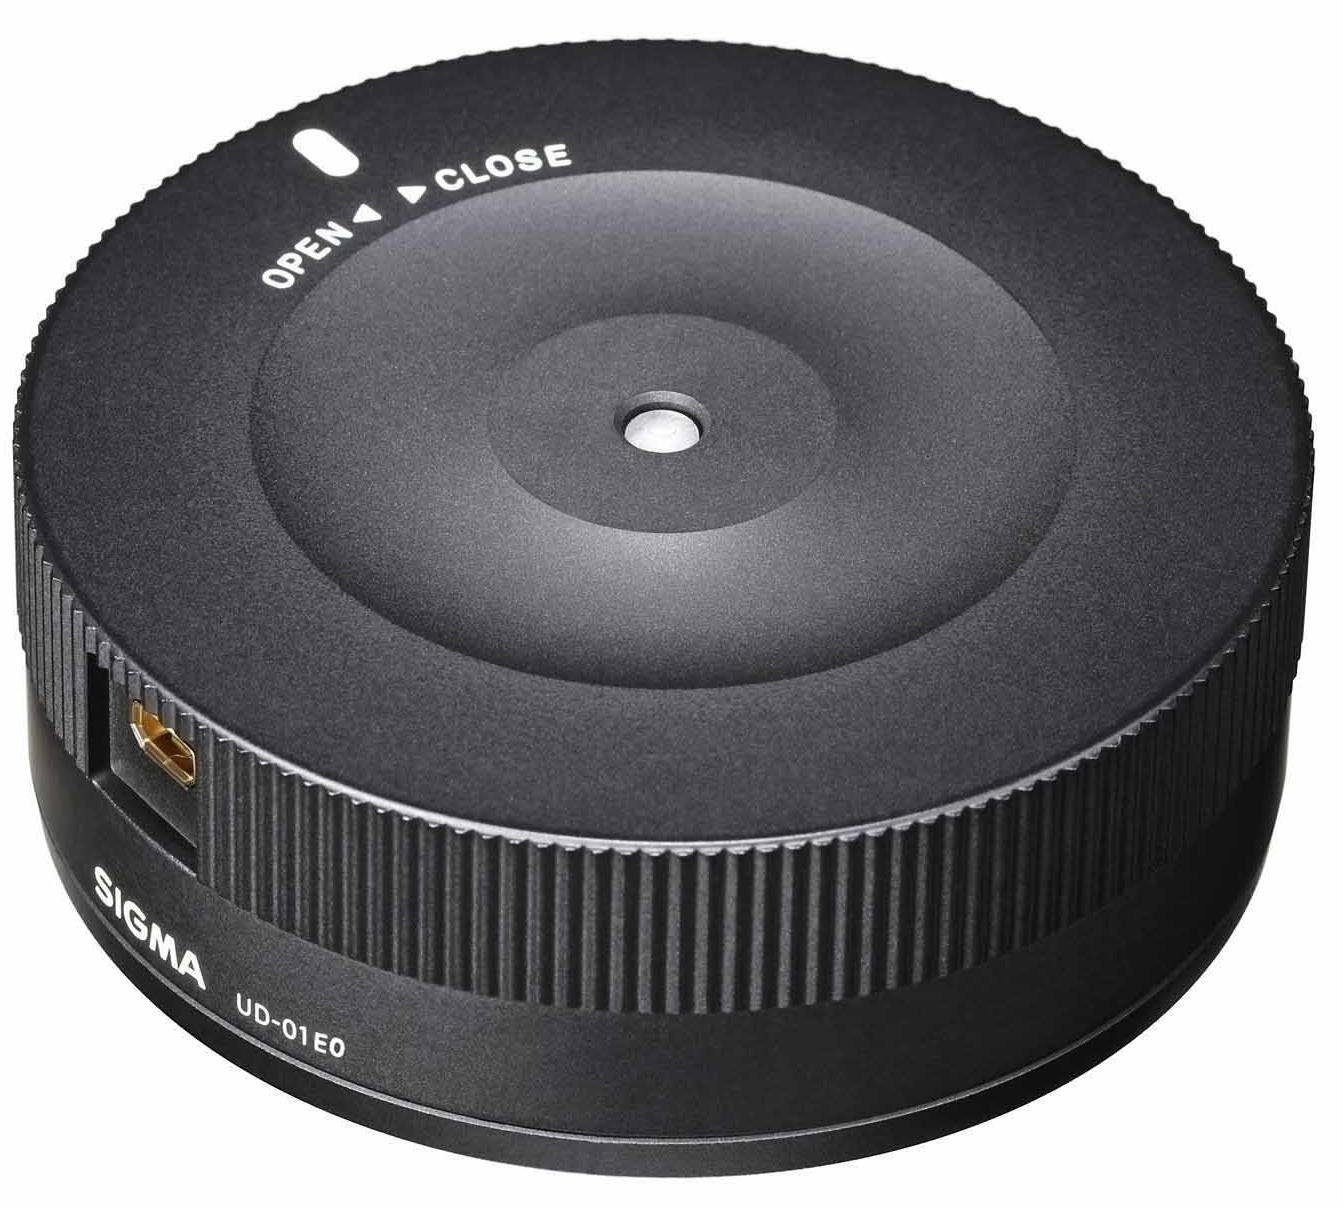 Objektivbajonett schwarz Objektivzubehör Canon SIGMA Dock USB